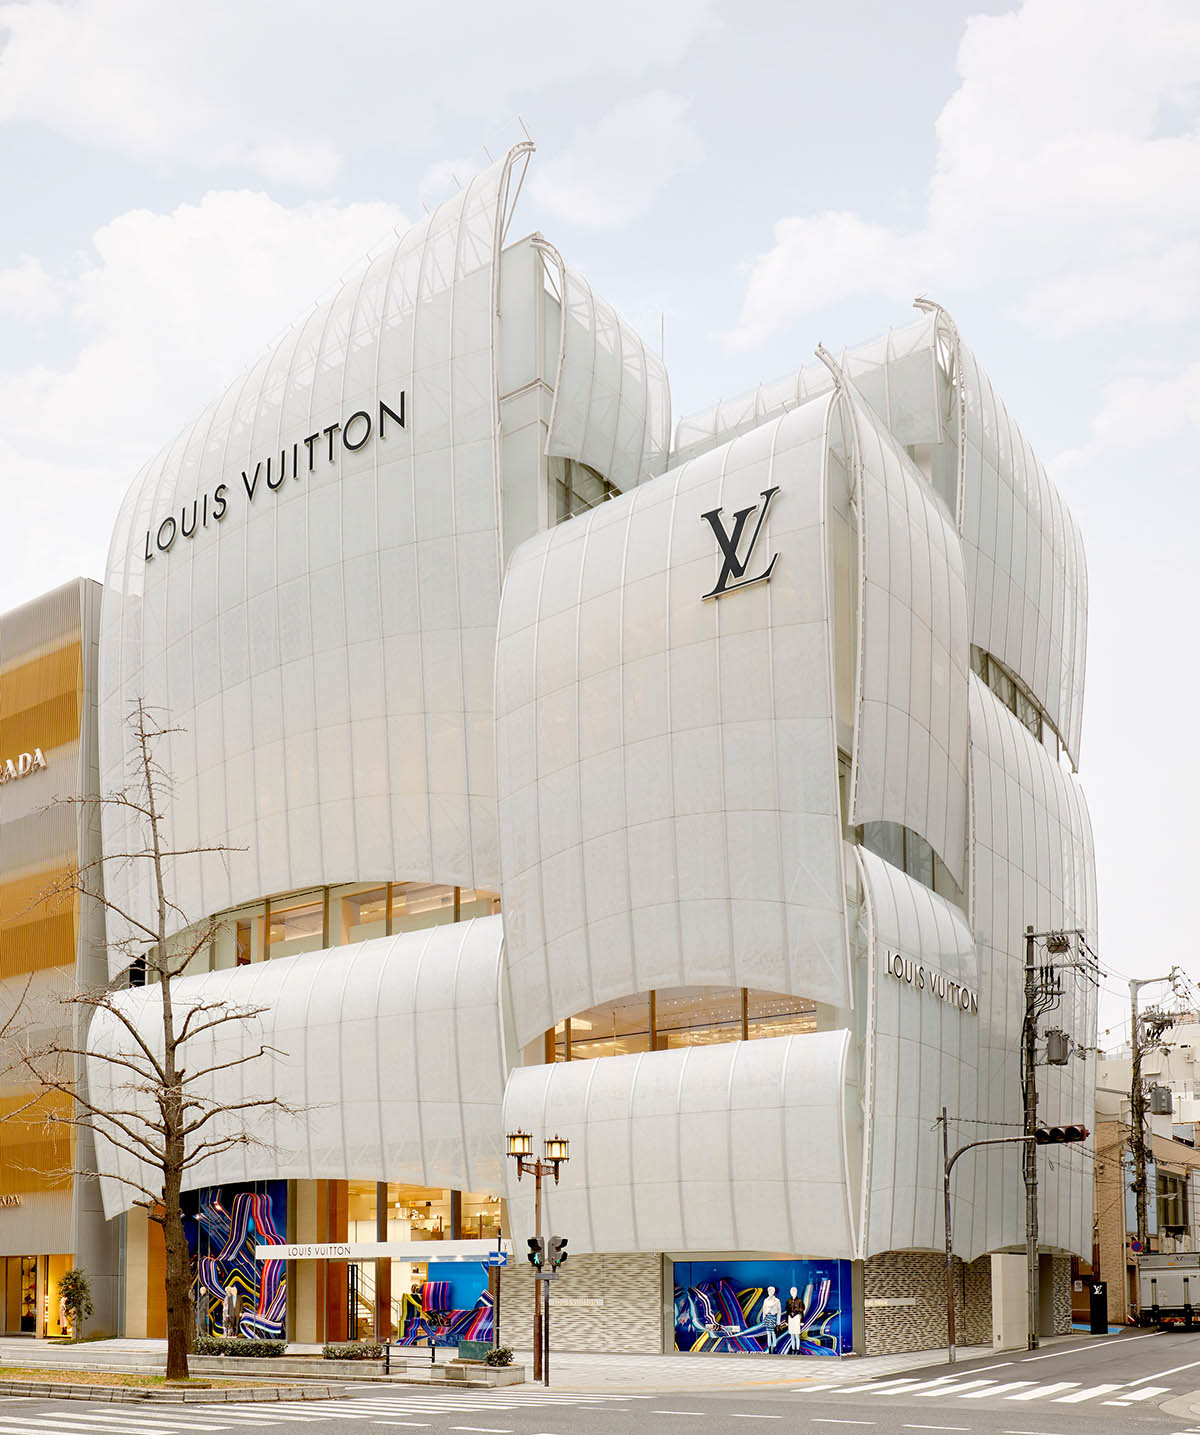 Louis Vuitton Building - Singapore on Vimeo